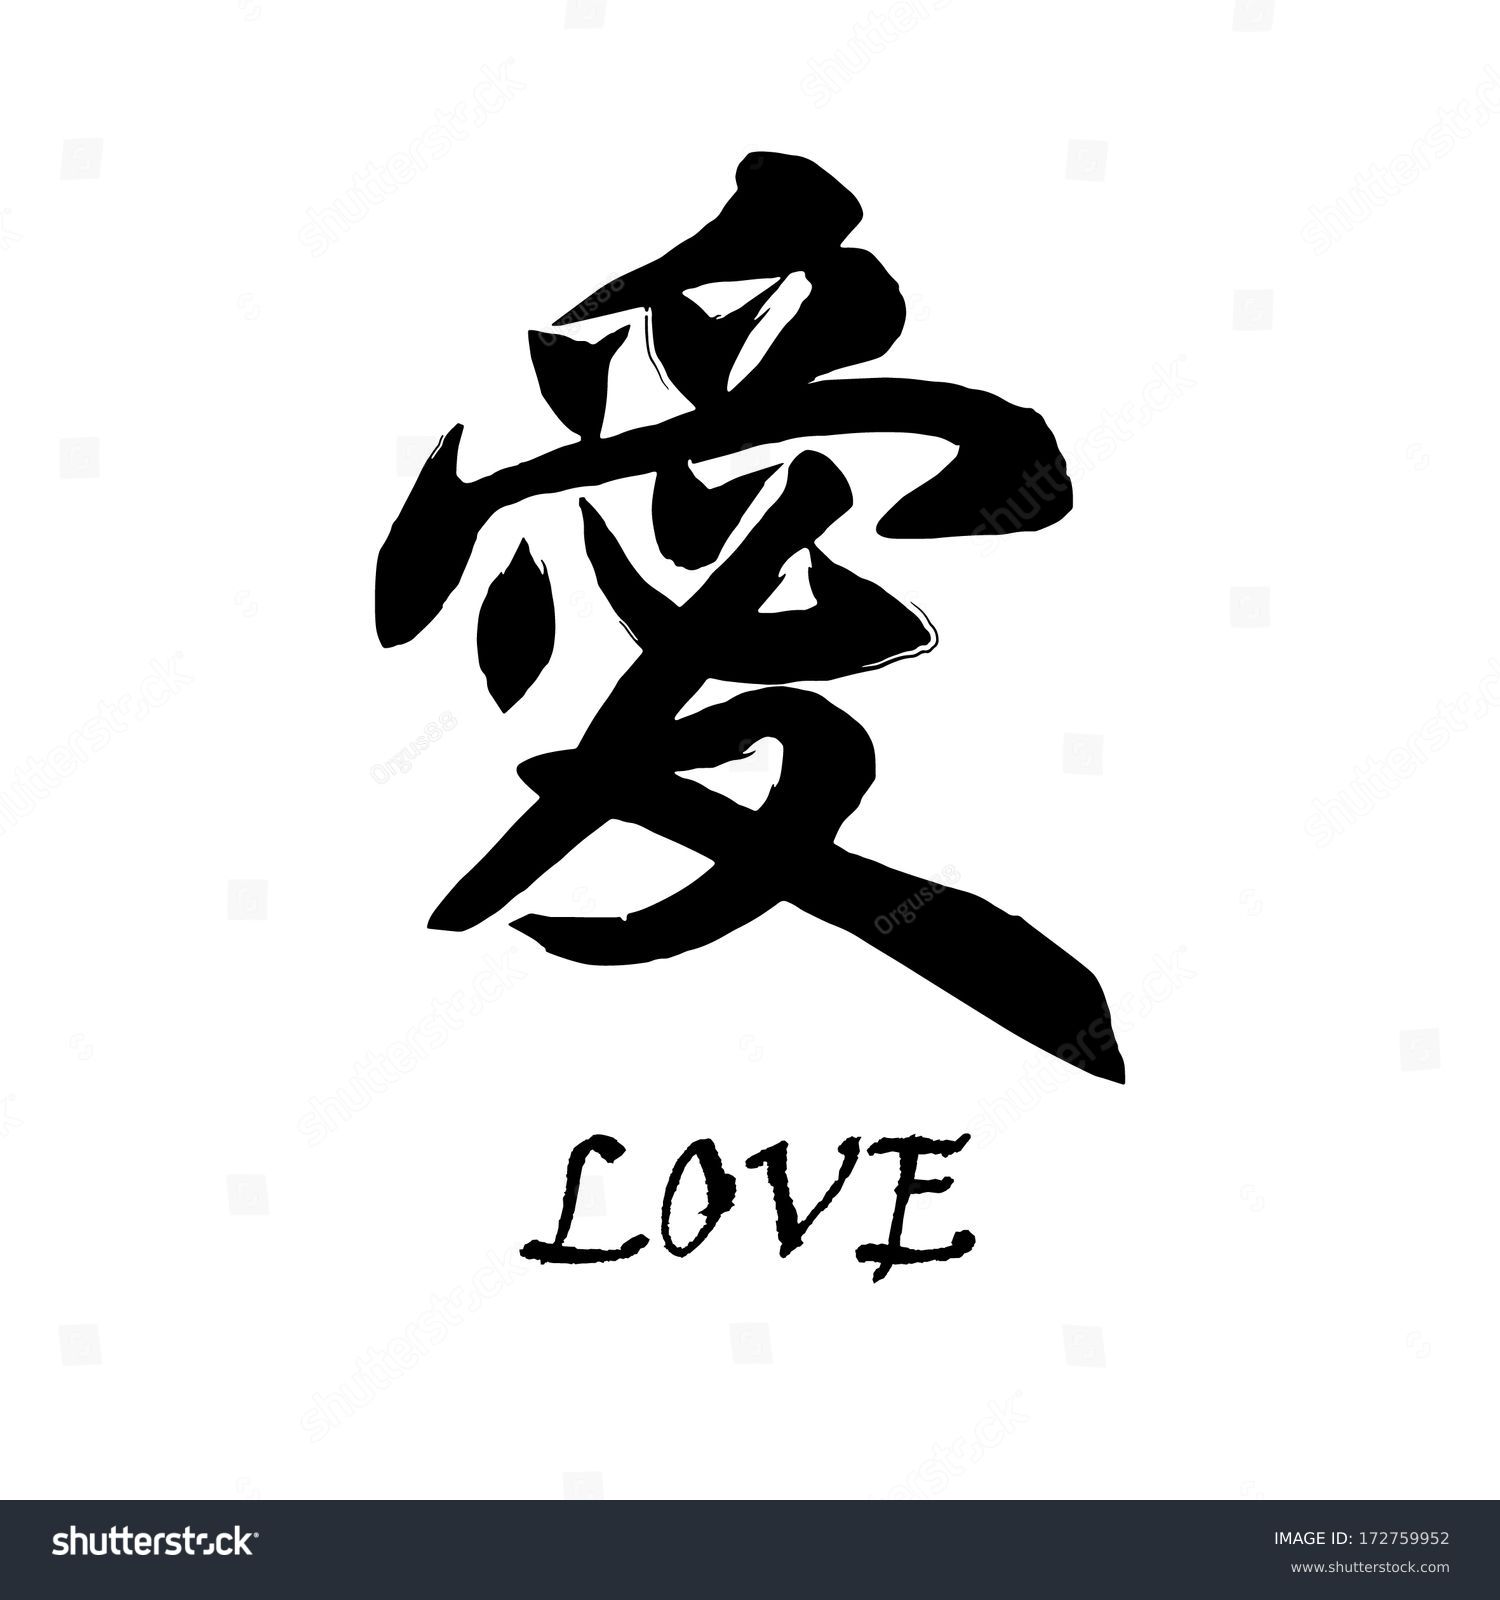 Kanji Font